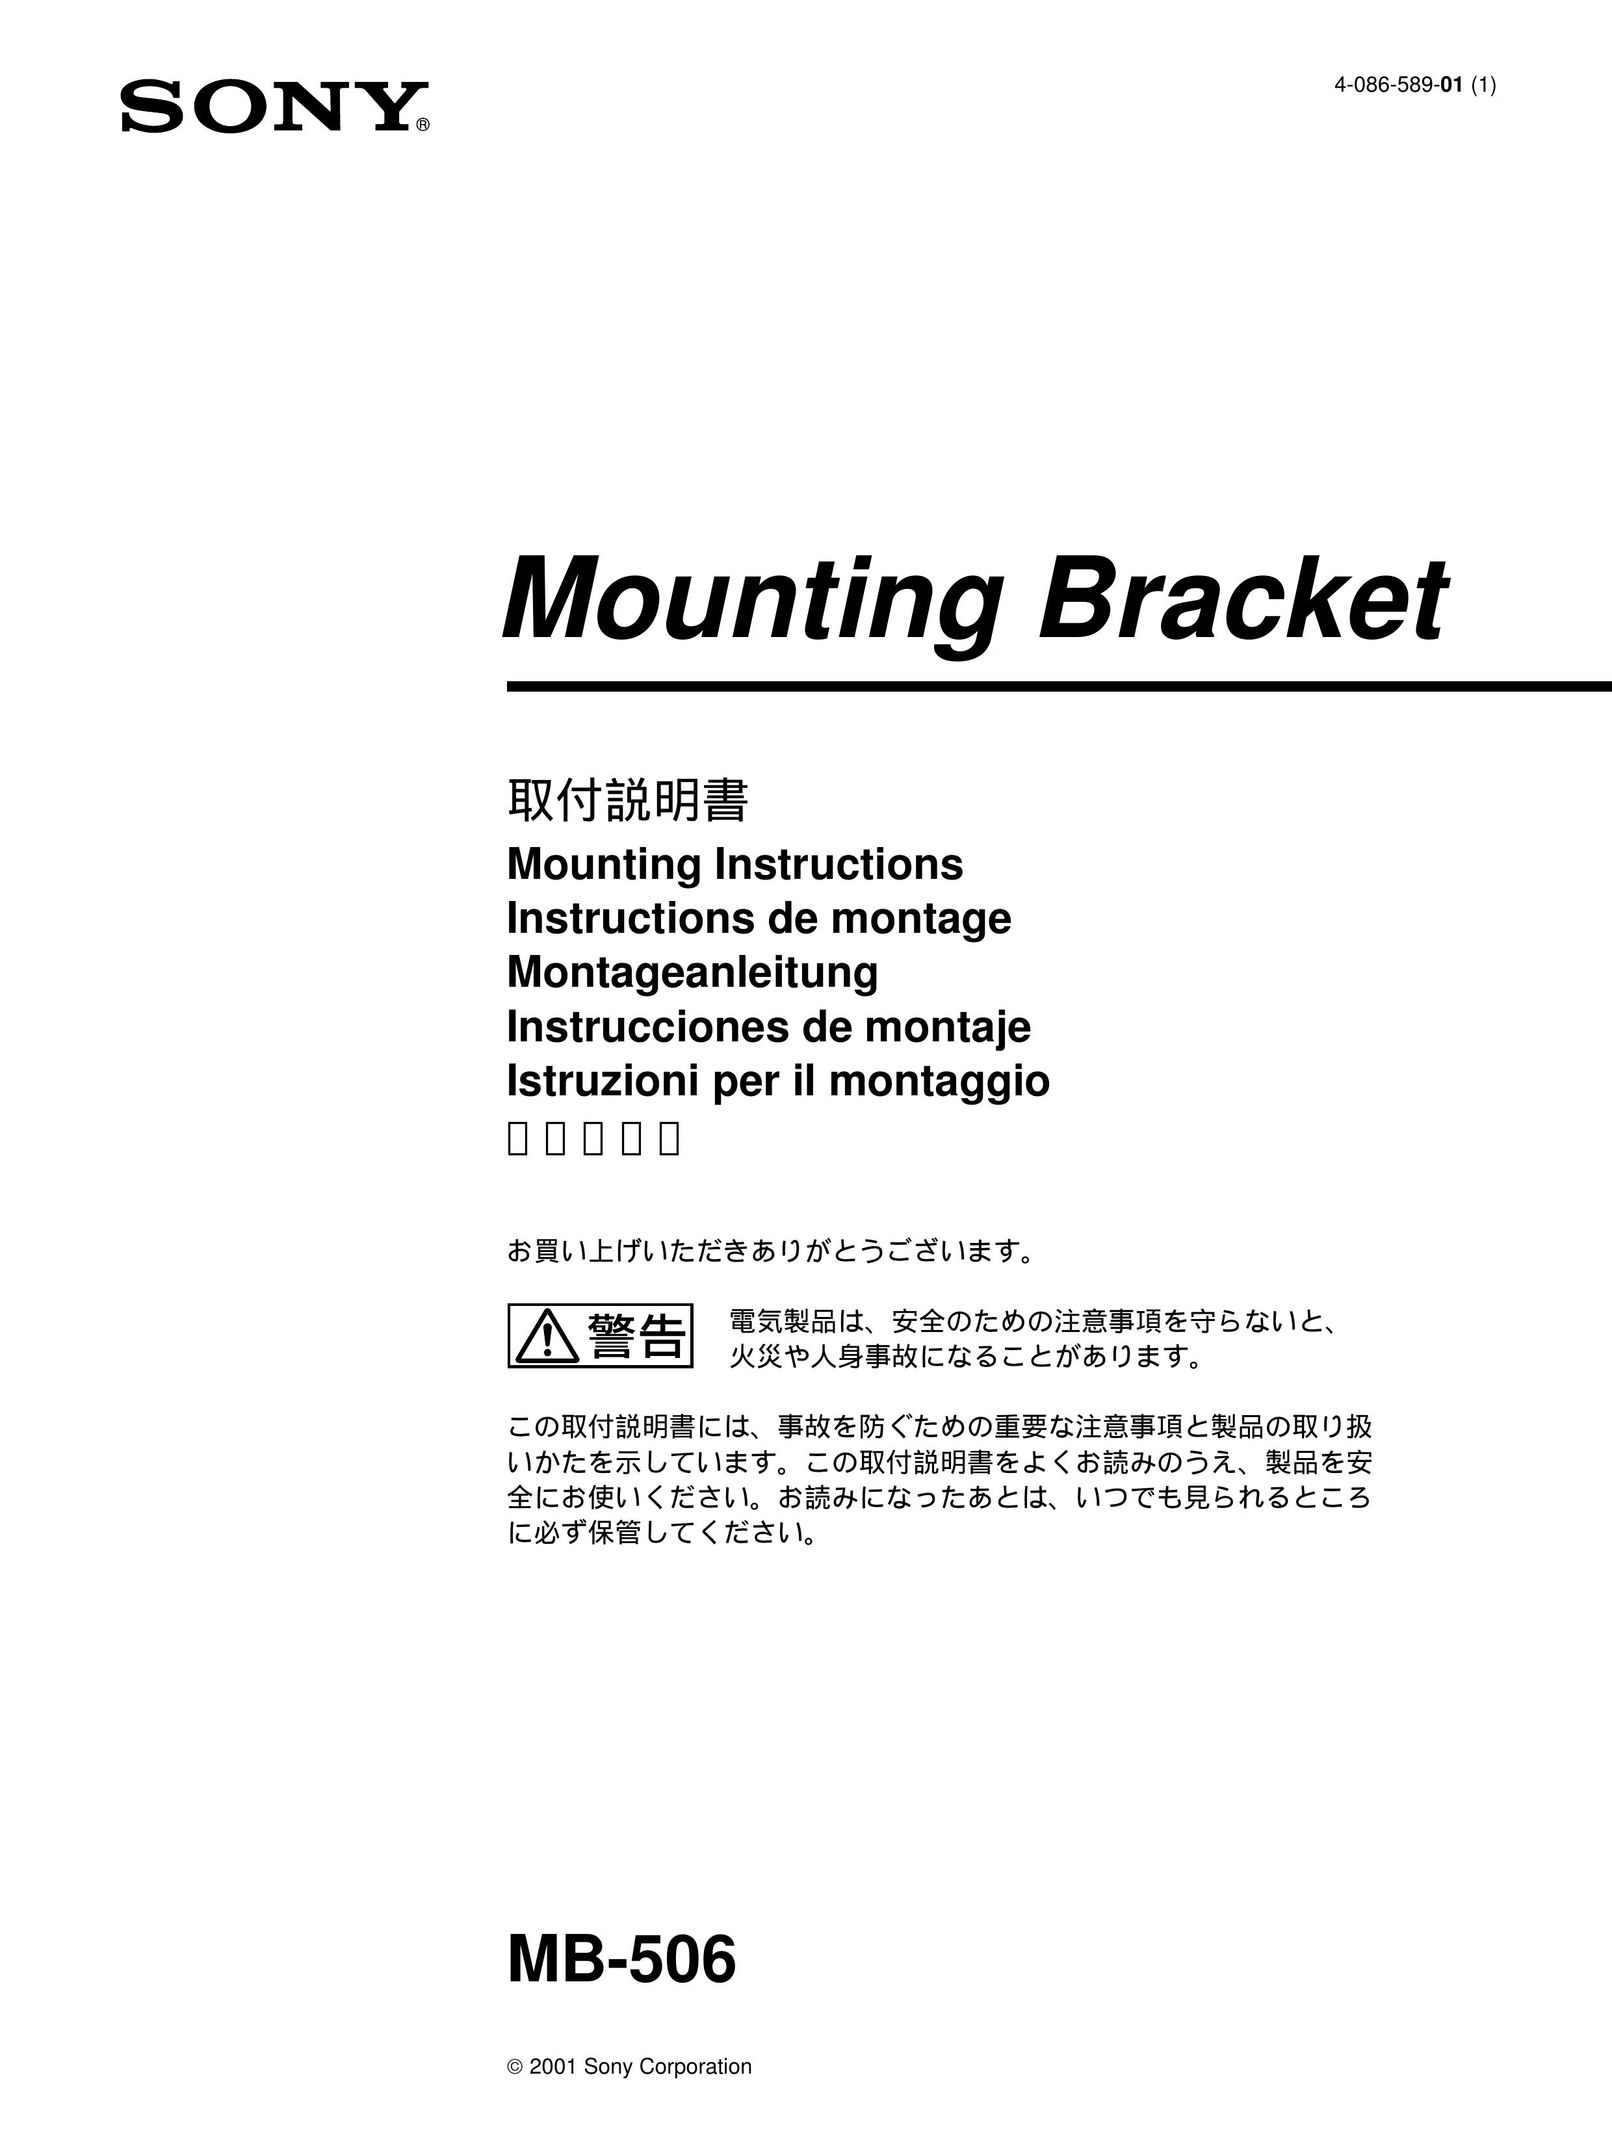 Sony MB-506 TV Mount User Manual